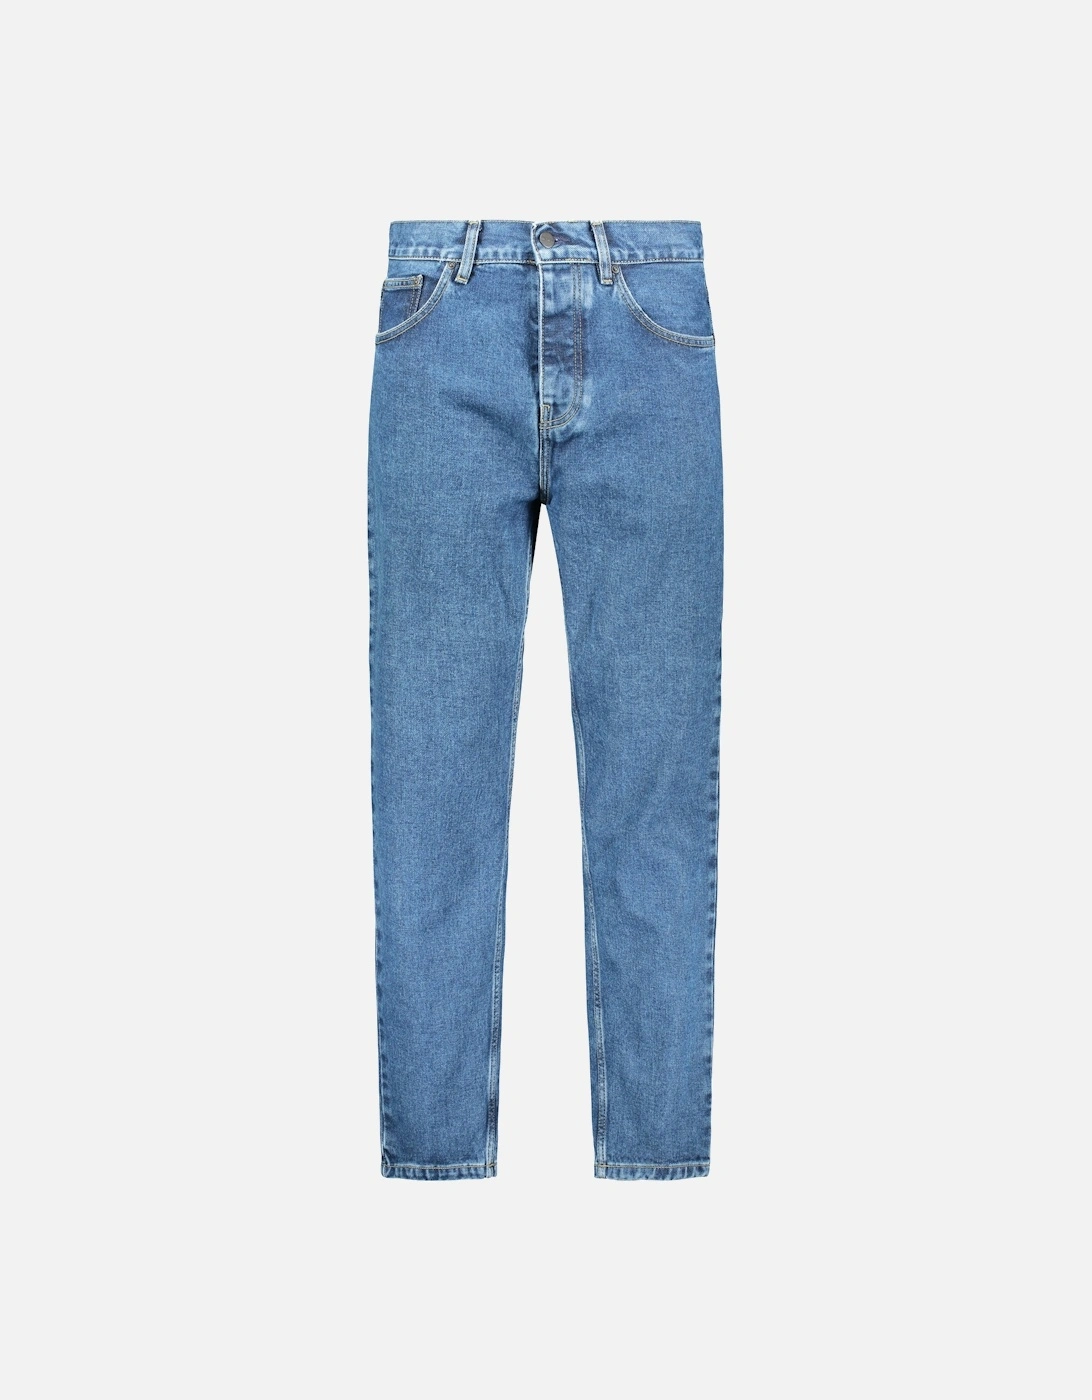 Carhartt Newel Pant Denim Blue Jeans, 4 of 3